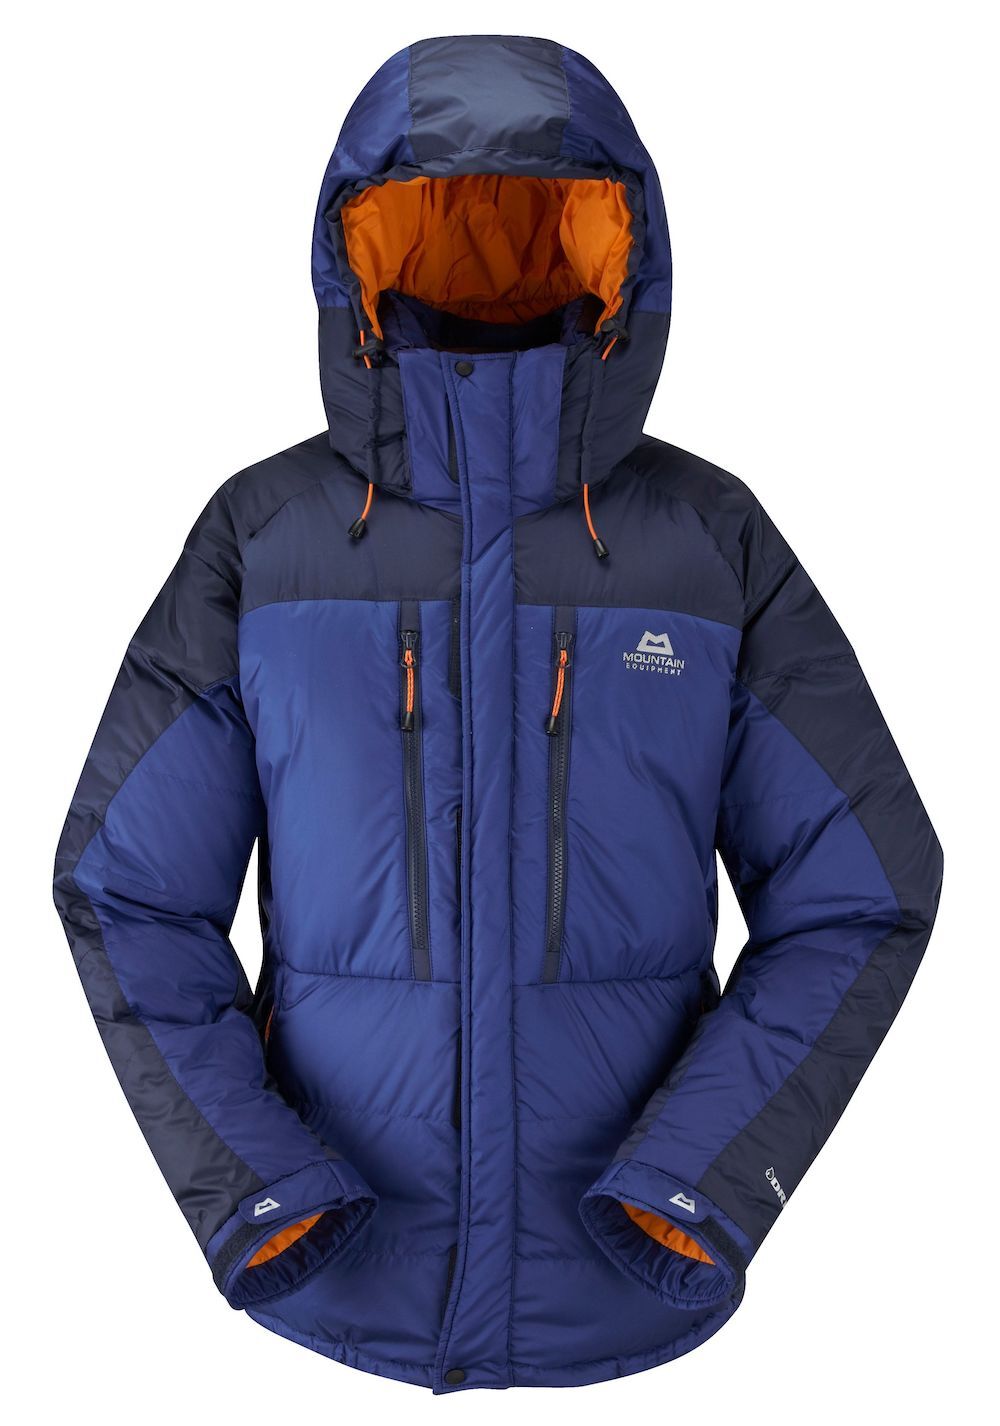 Mountain Equipment Annapurna Jacket - Chaqueta de plumas - Hombre